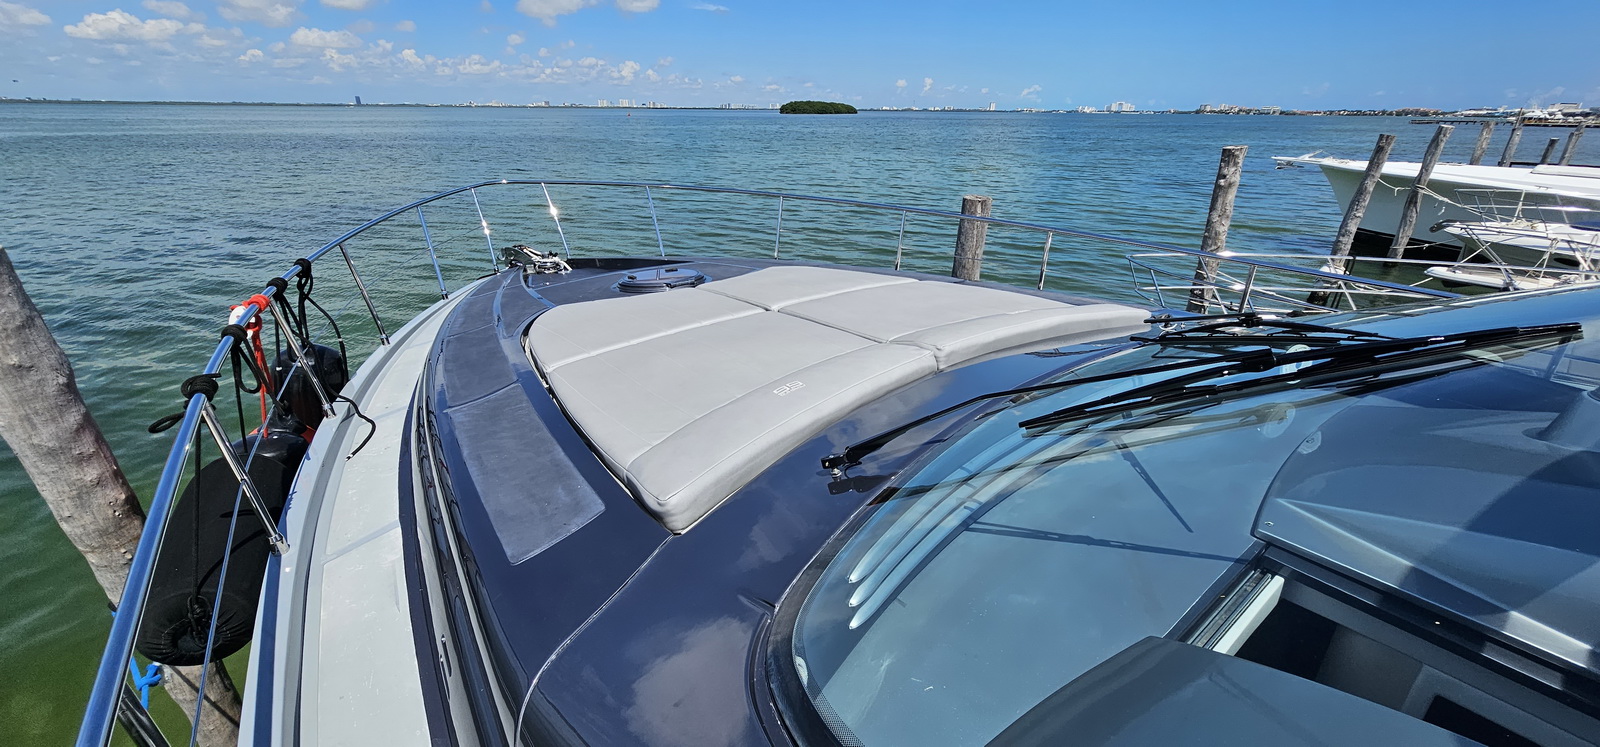 Rent a Pershing yacht cancun boats rental